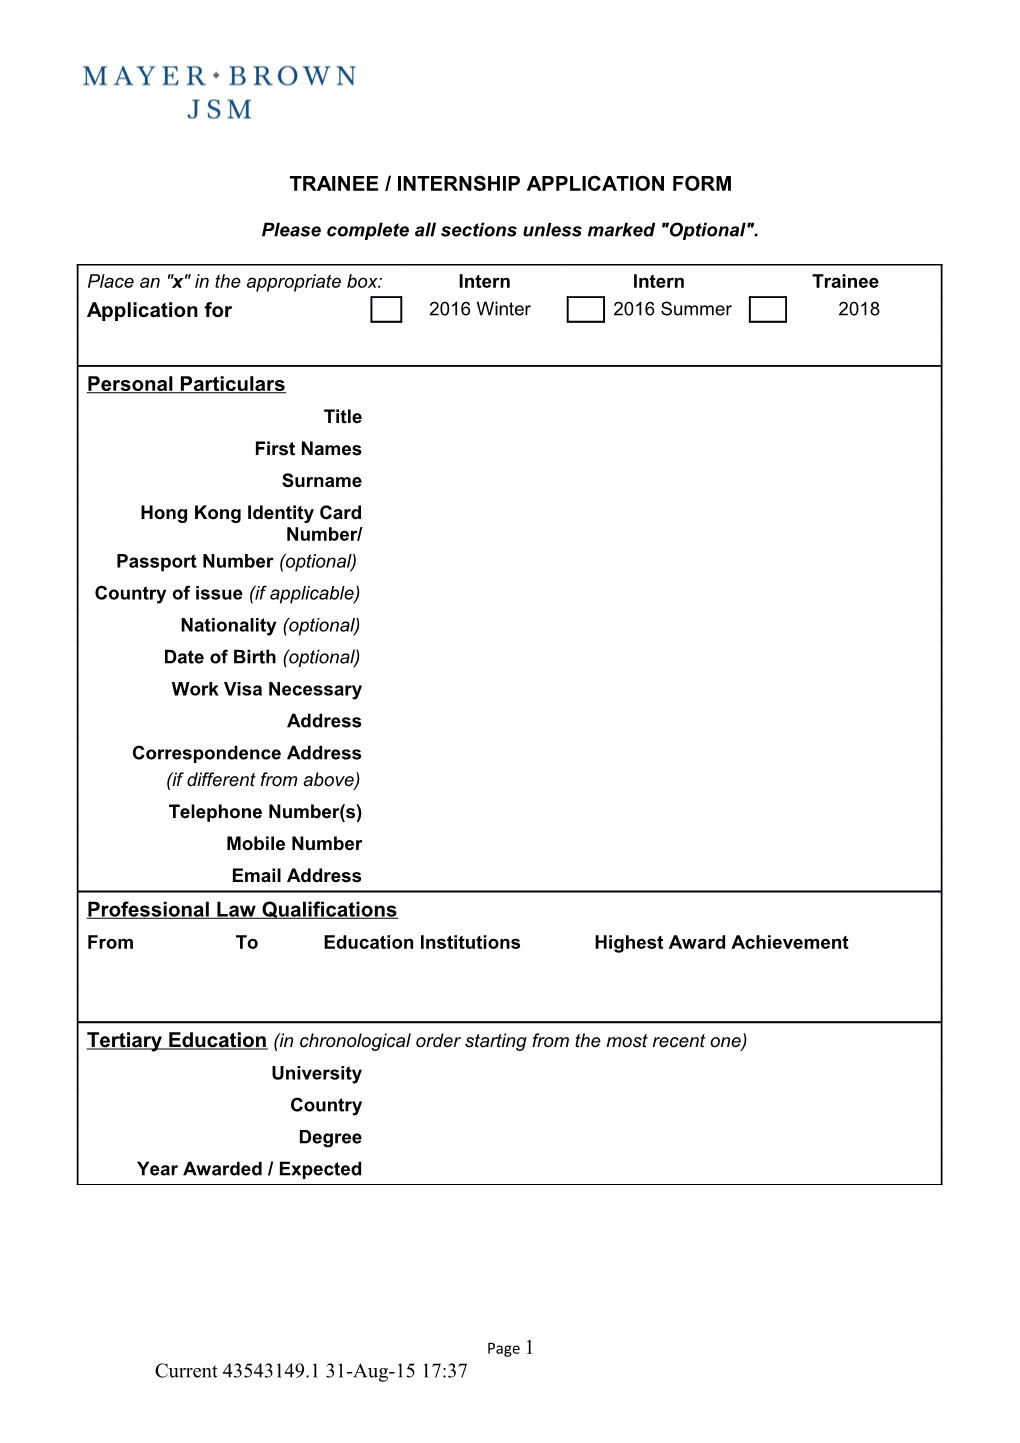 Trainee / Internship Application Form